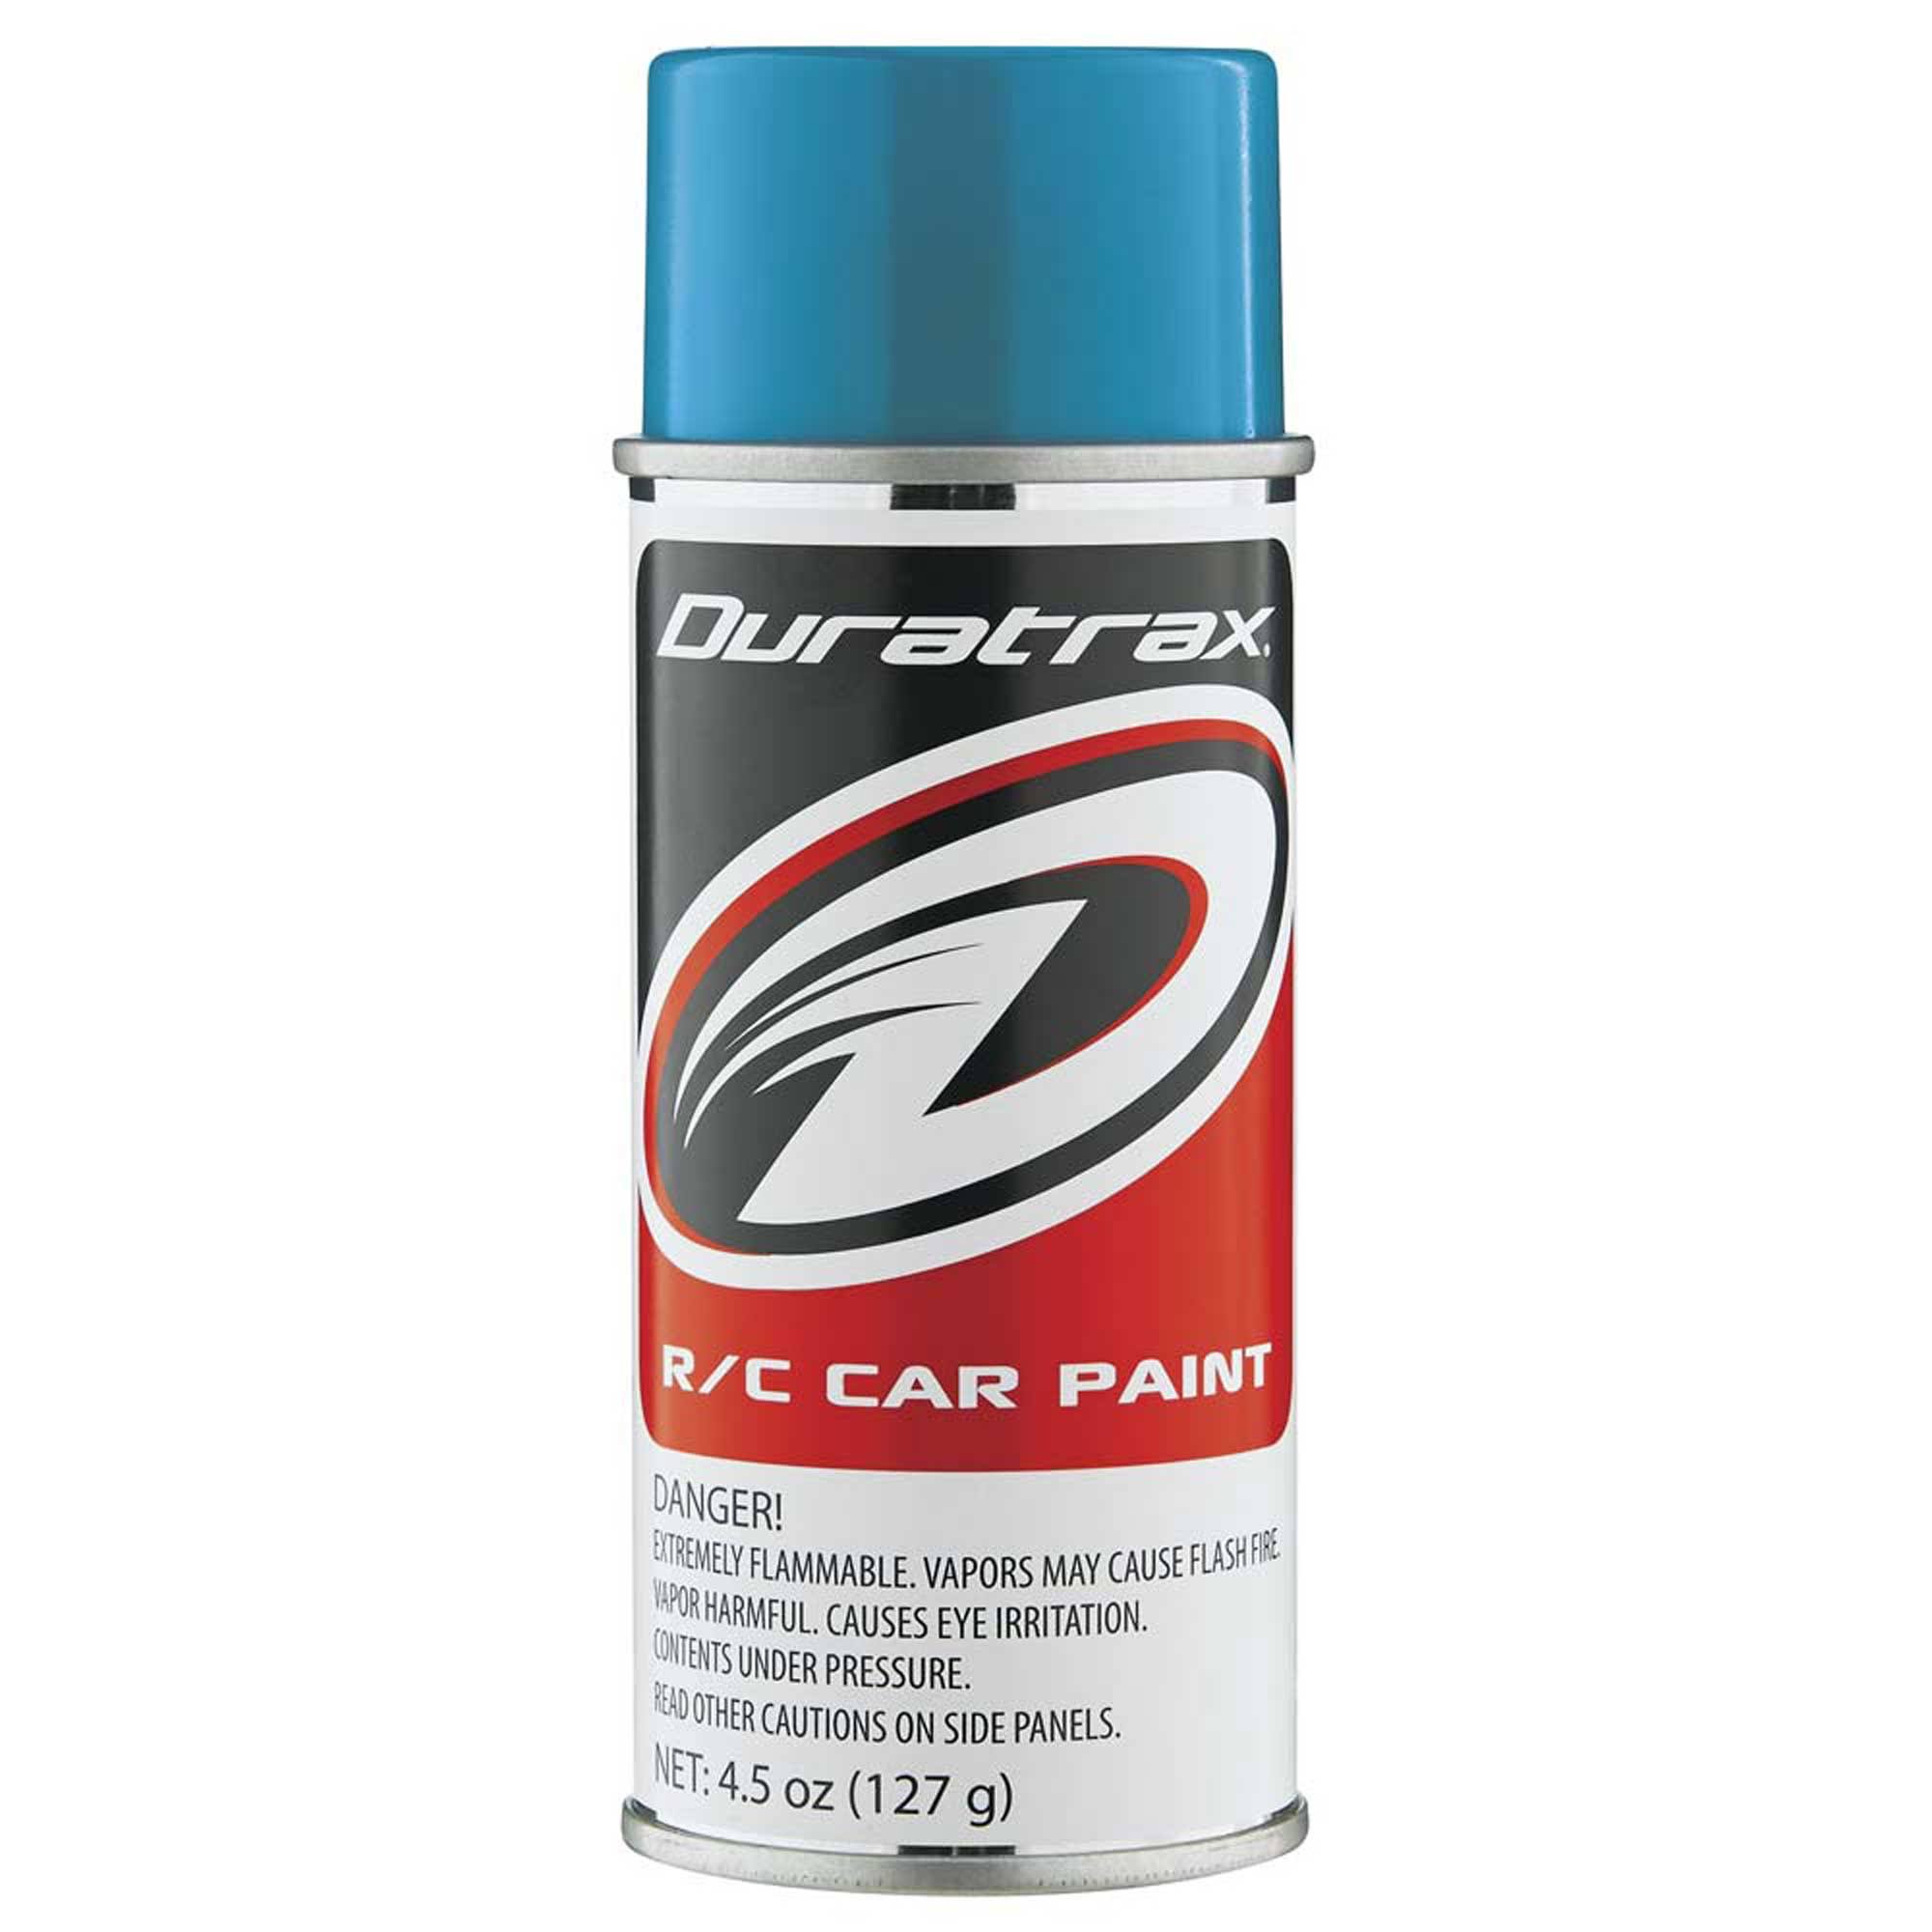 Duratrax Polycarbonate Radio Control Vehicle Body Spray Paint - Teal